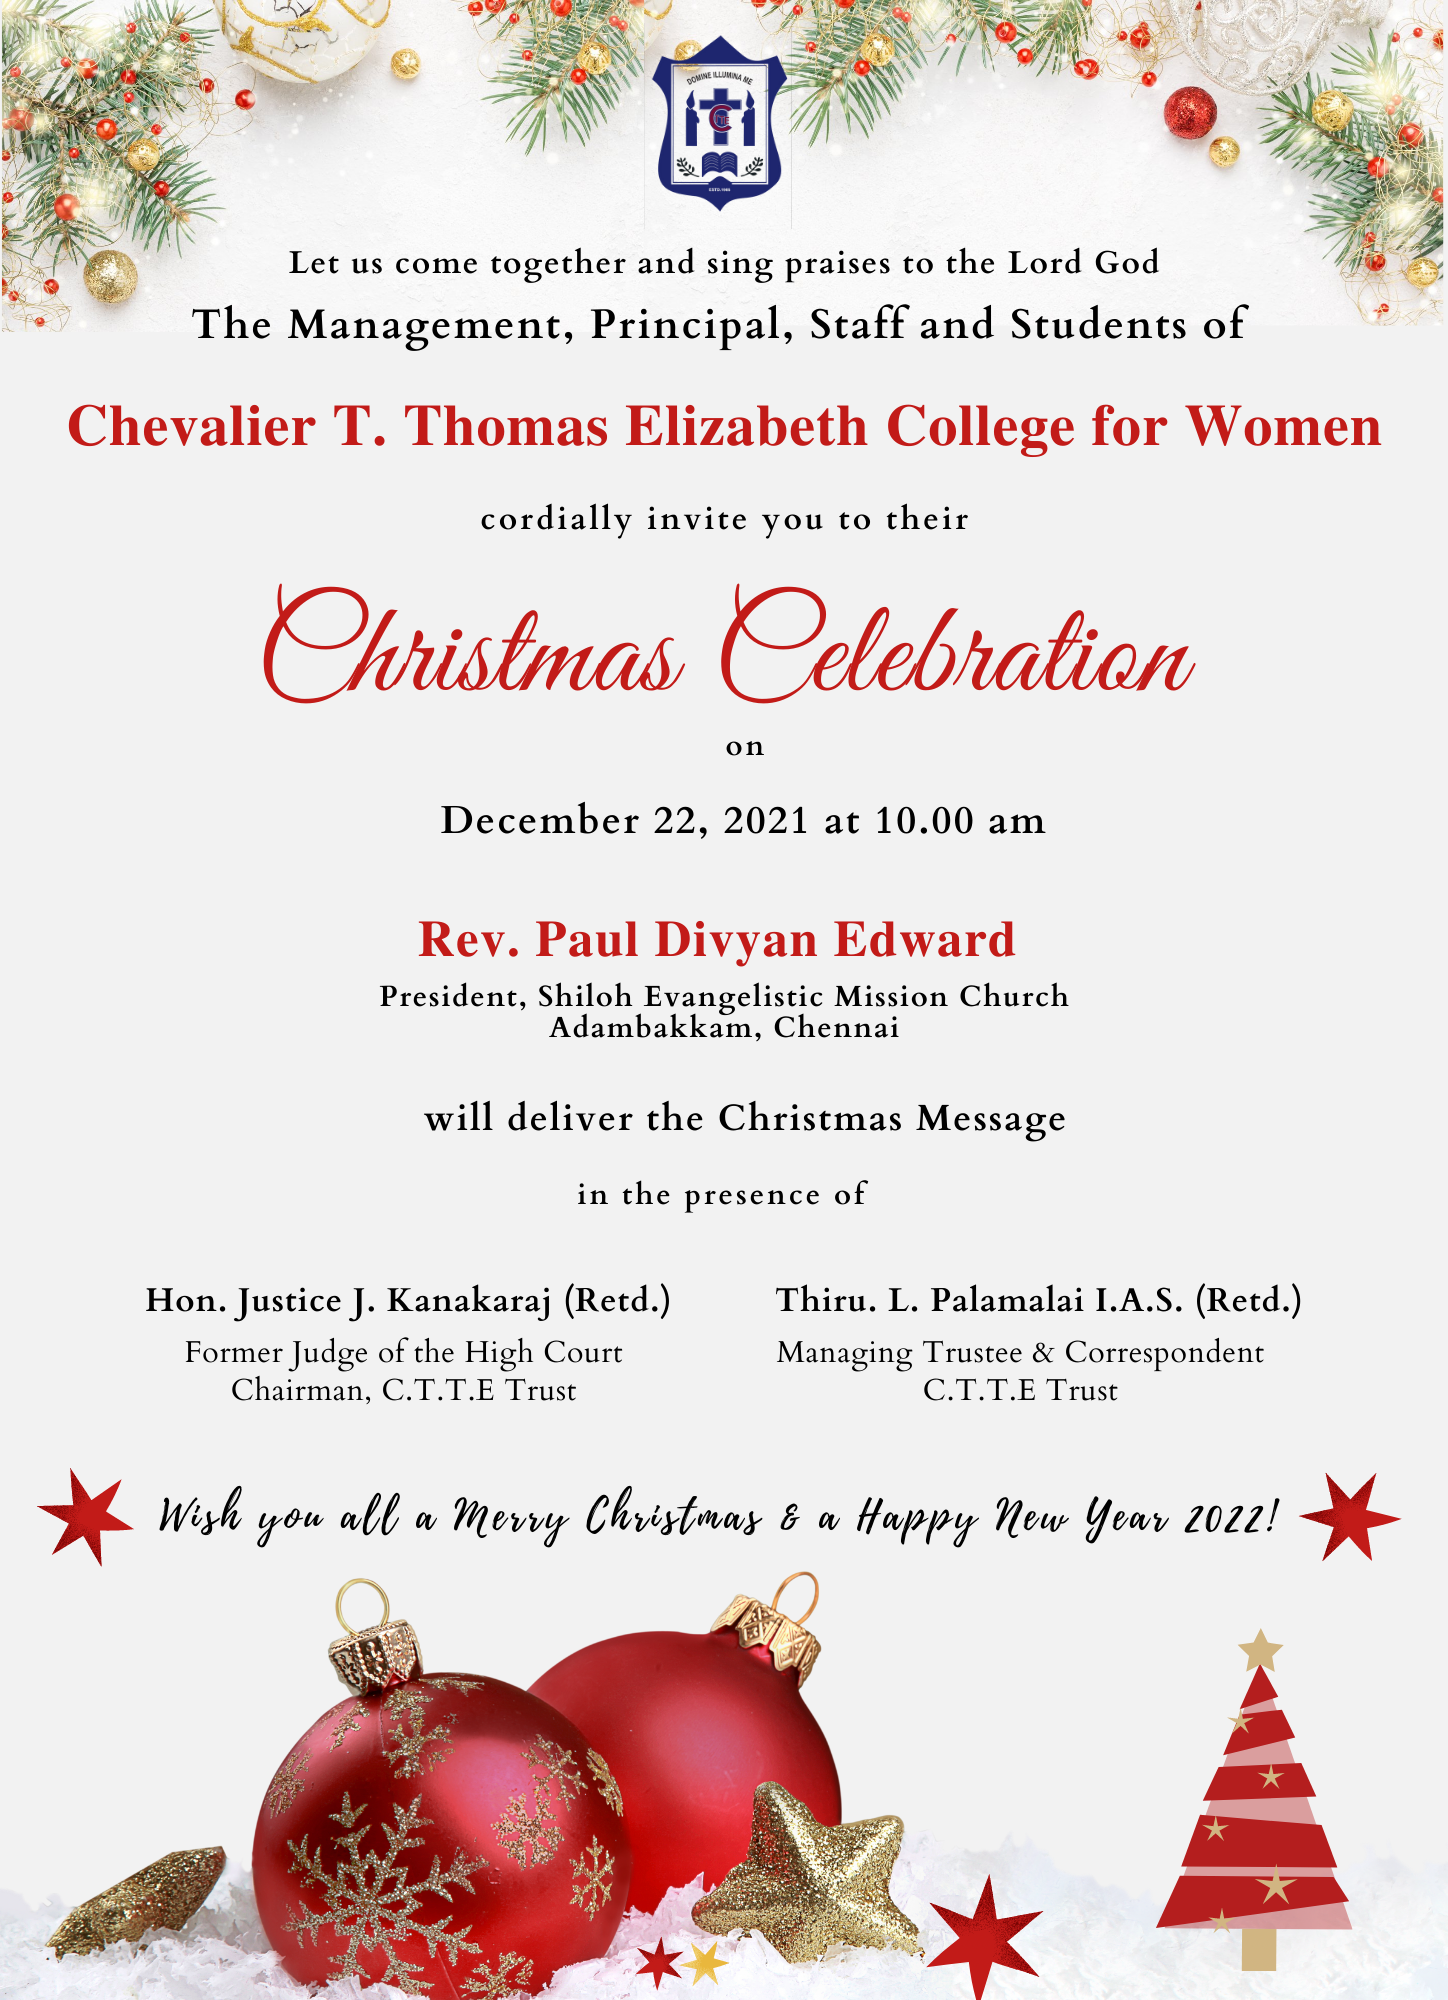 Christmas Celebration_CTTE College for Women